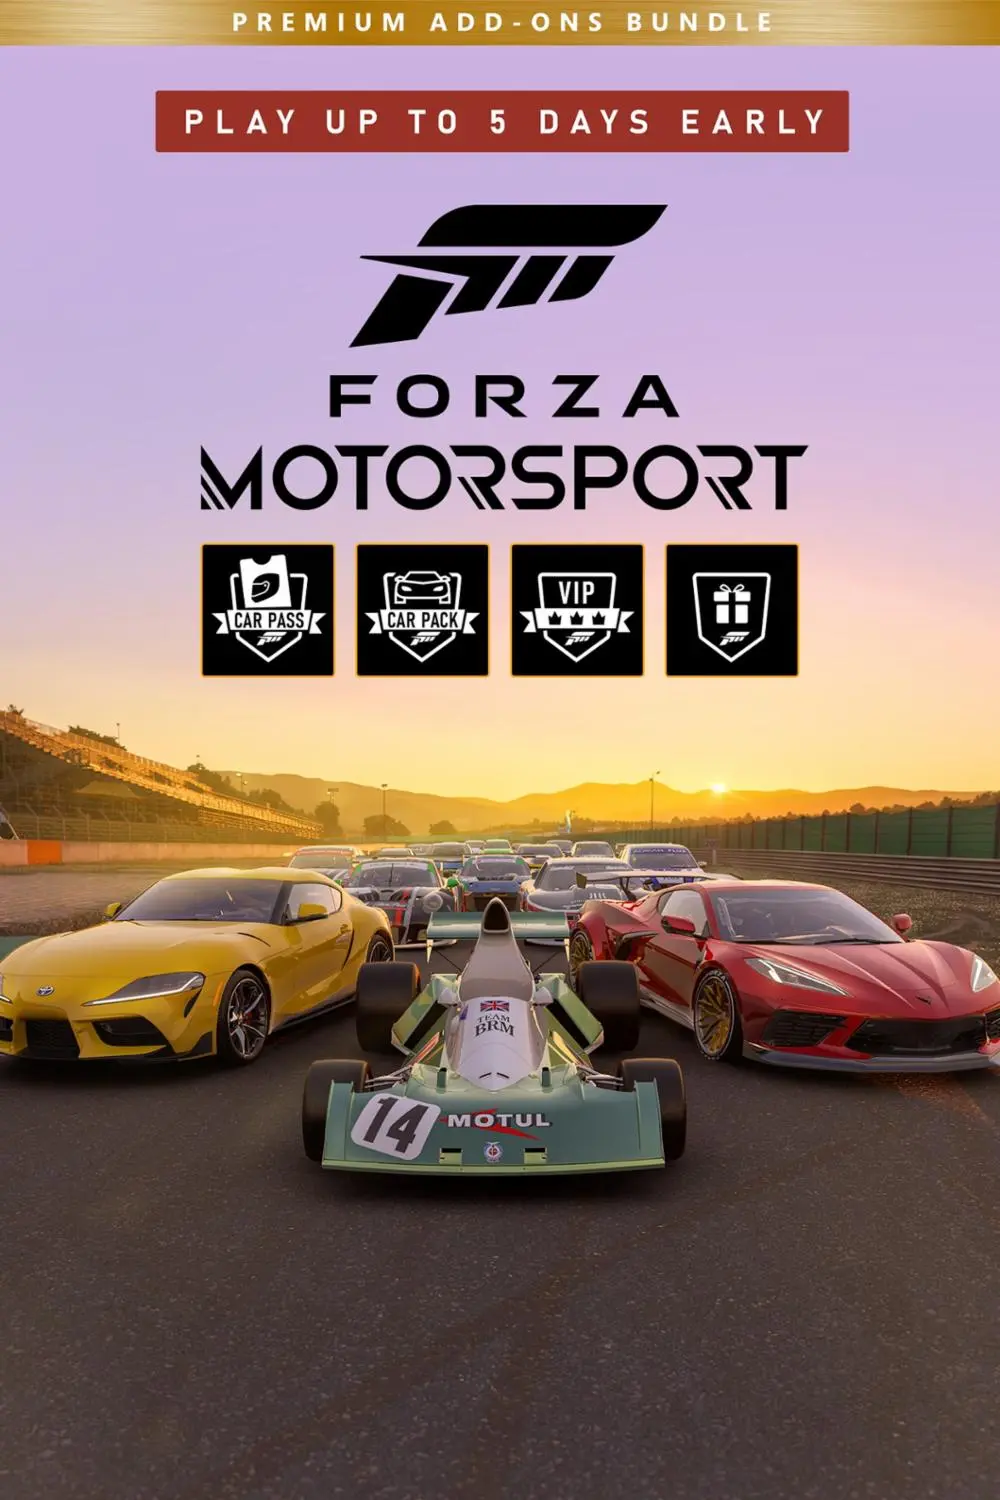 Comprar Forza Horizon 4 - Pacote de Boas-vindas - Microsoft Store